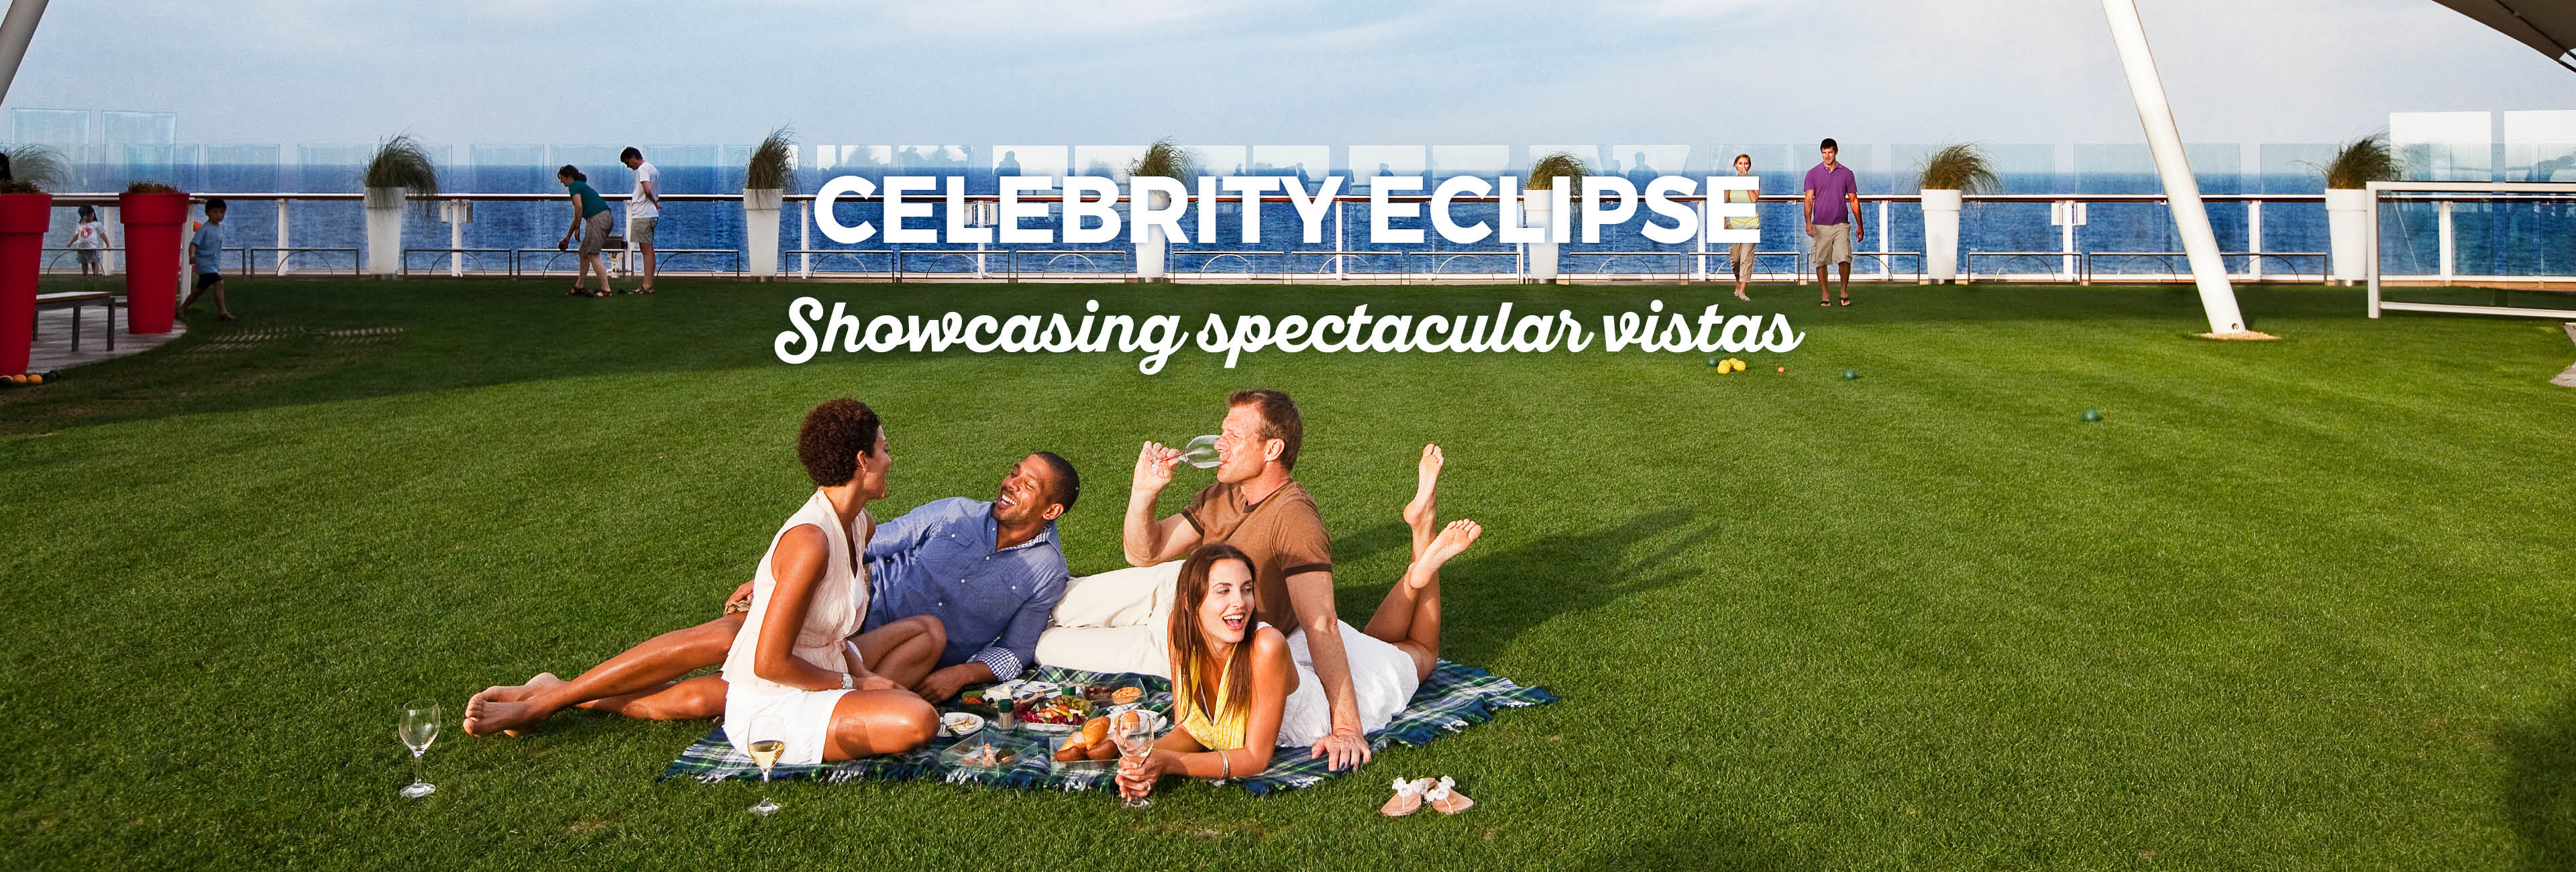 celebrity-eclipse-1.jpg